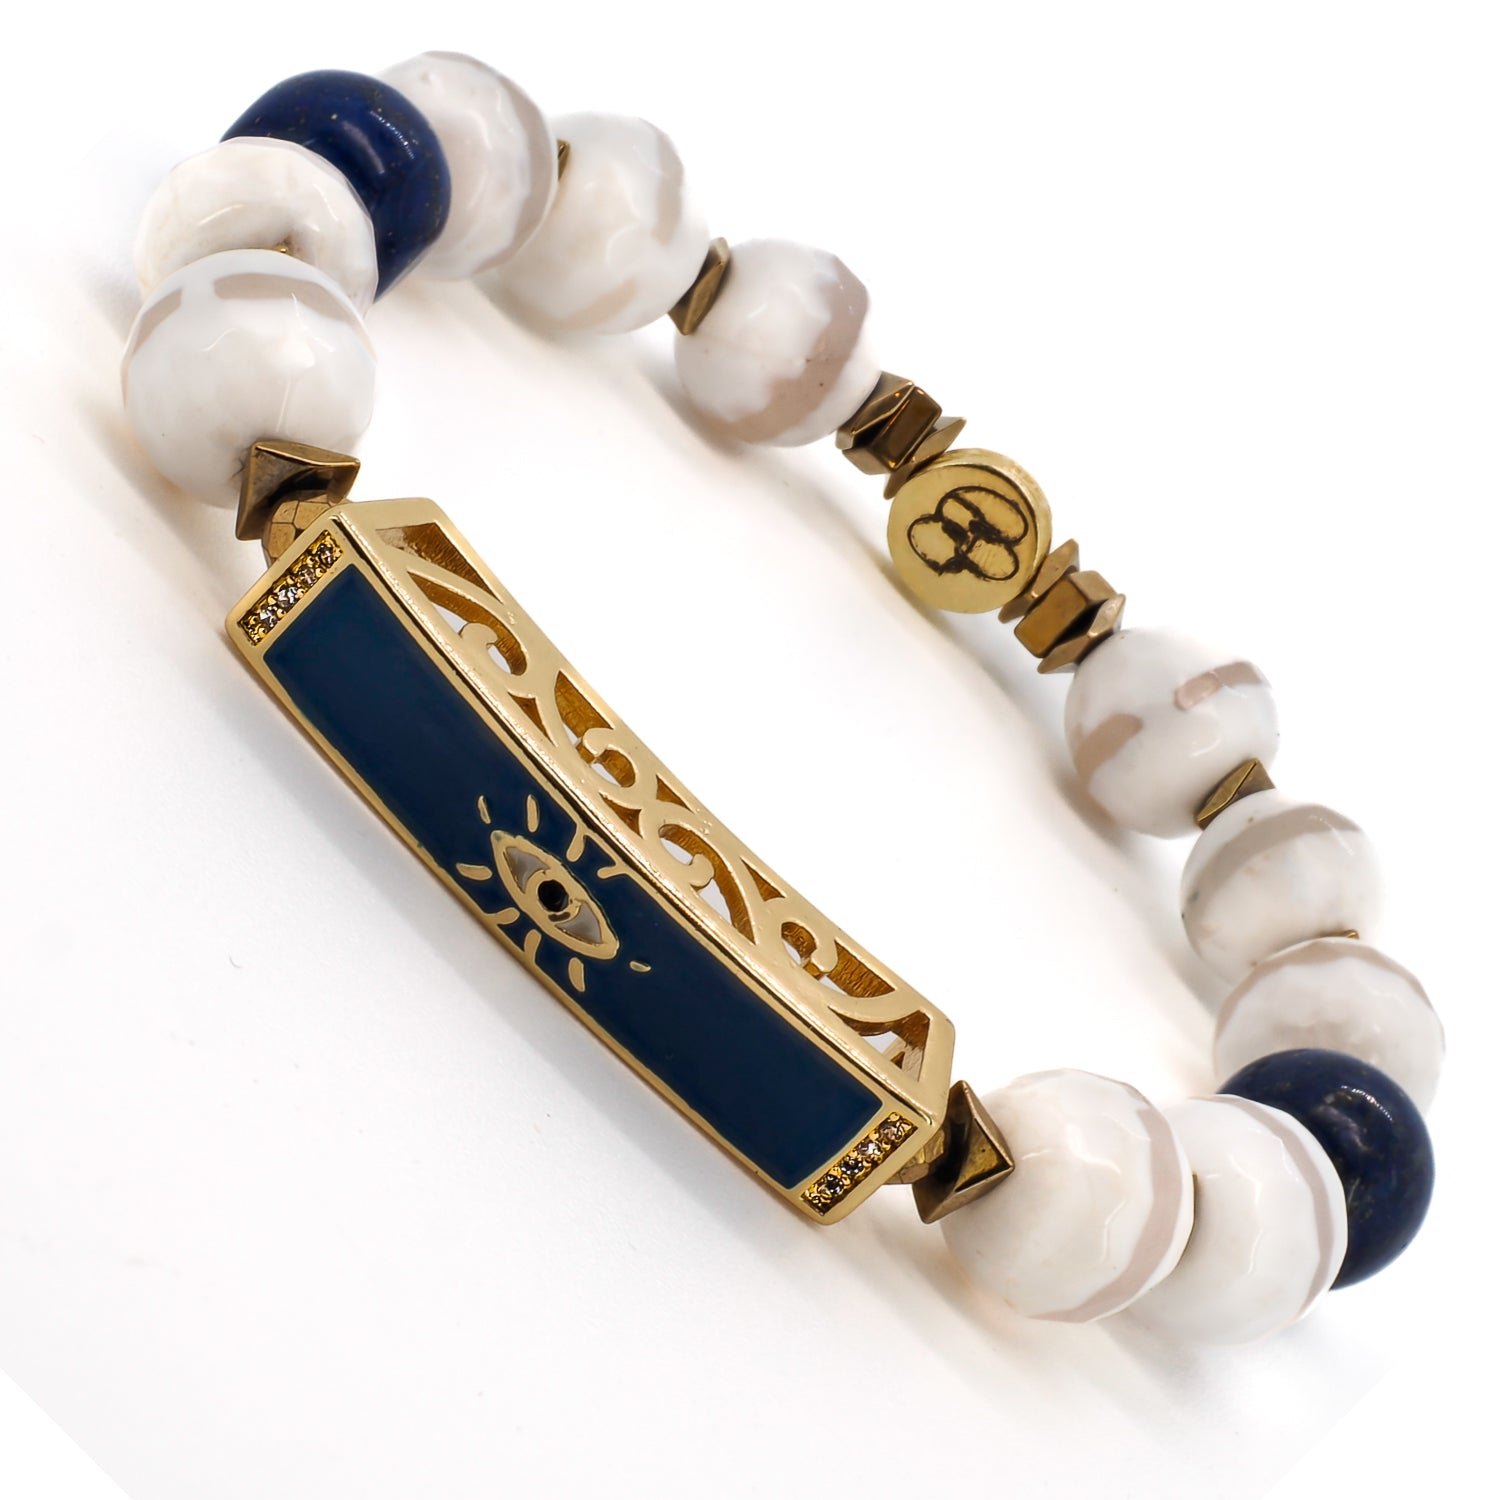 White jade and Lapis Lazuli accents on the Blue Amulet Bracelet